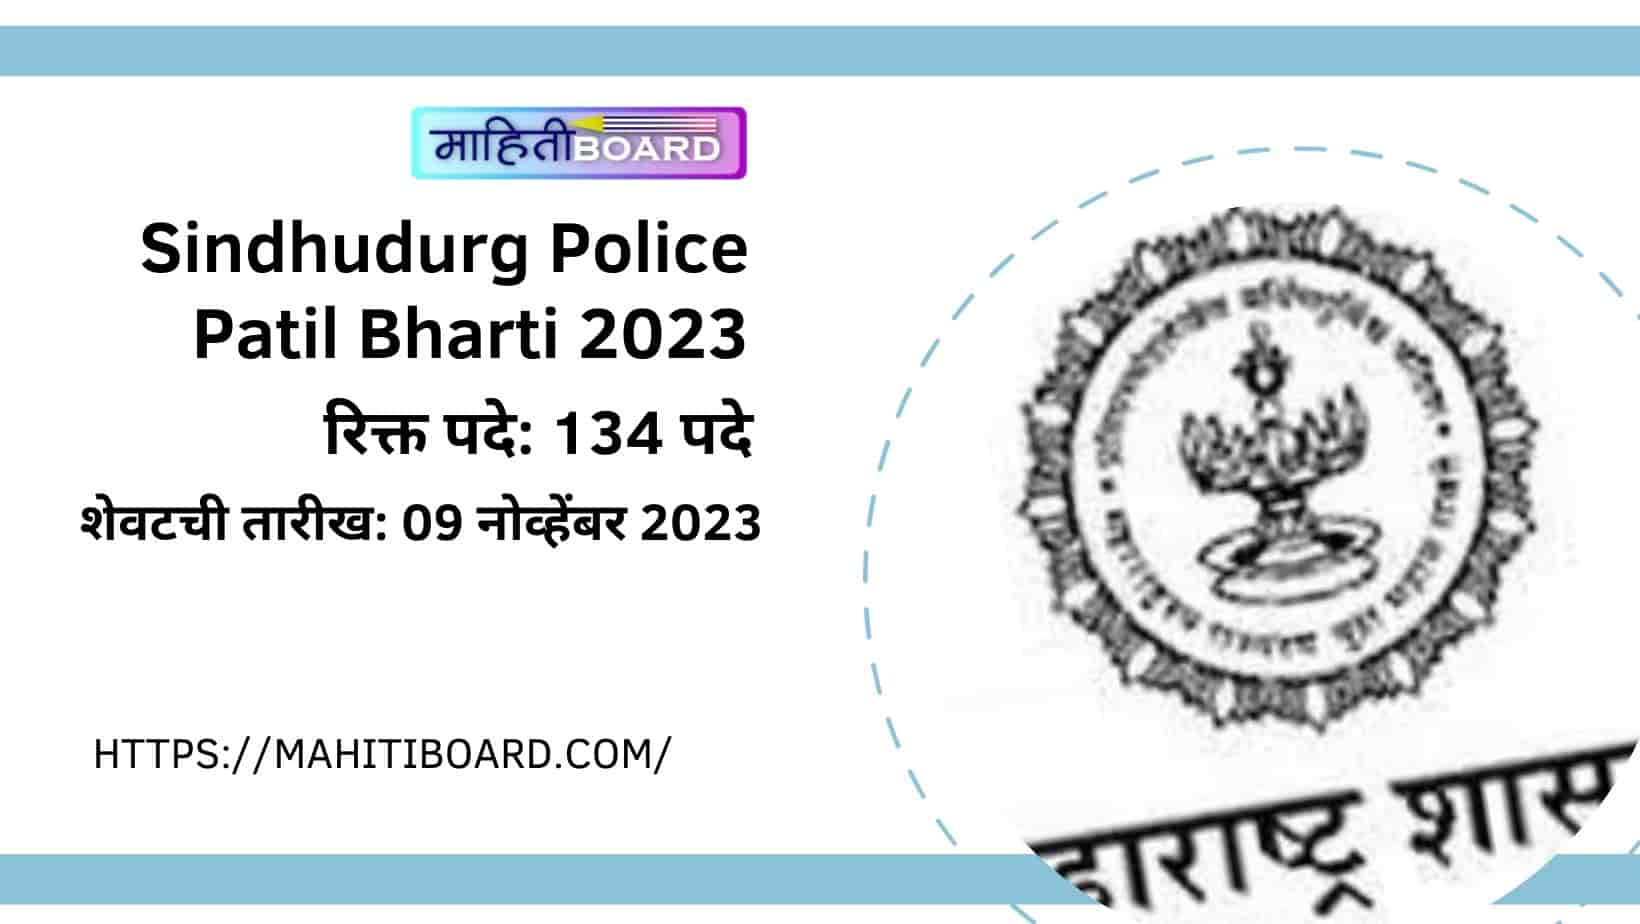 Sindhudurg Police Patil Bharti 2023